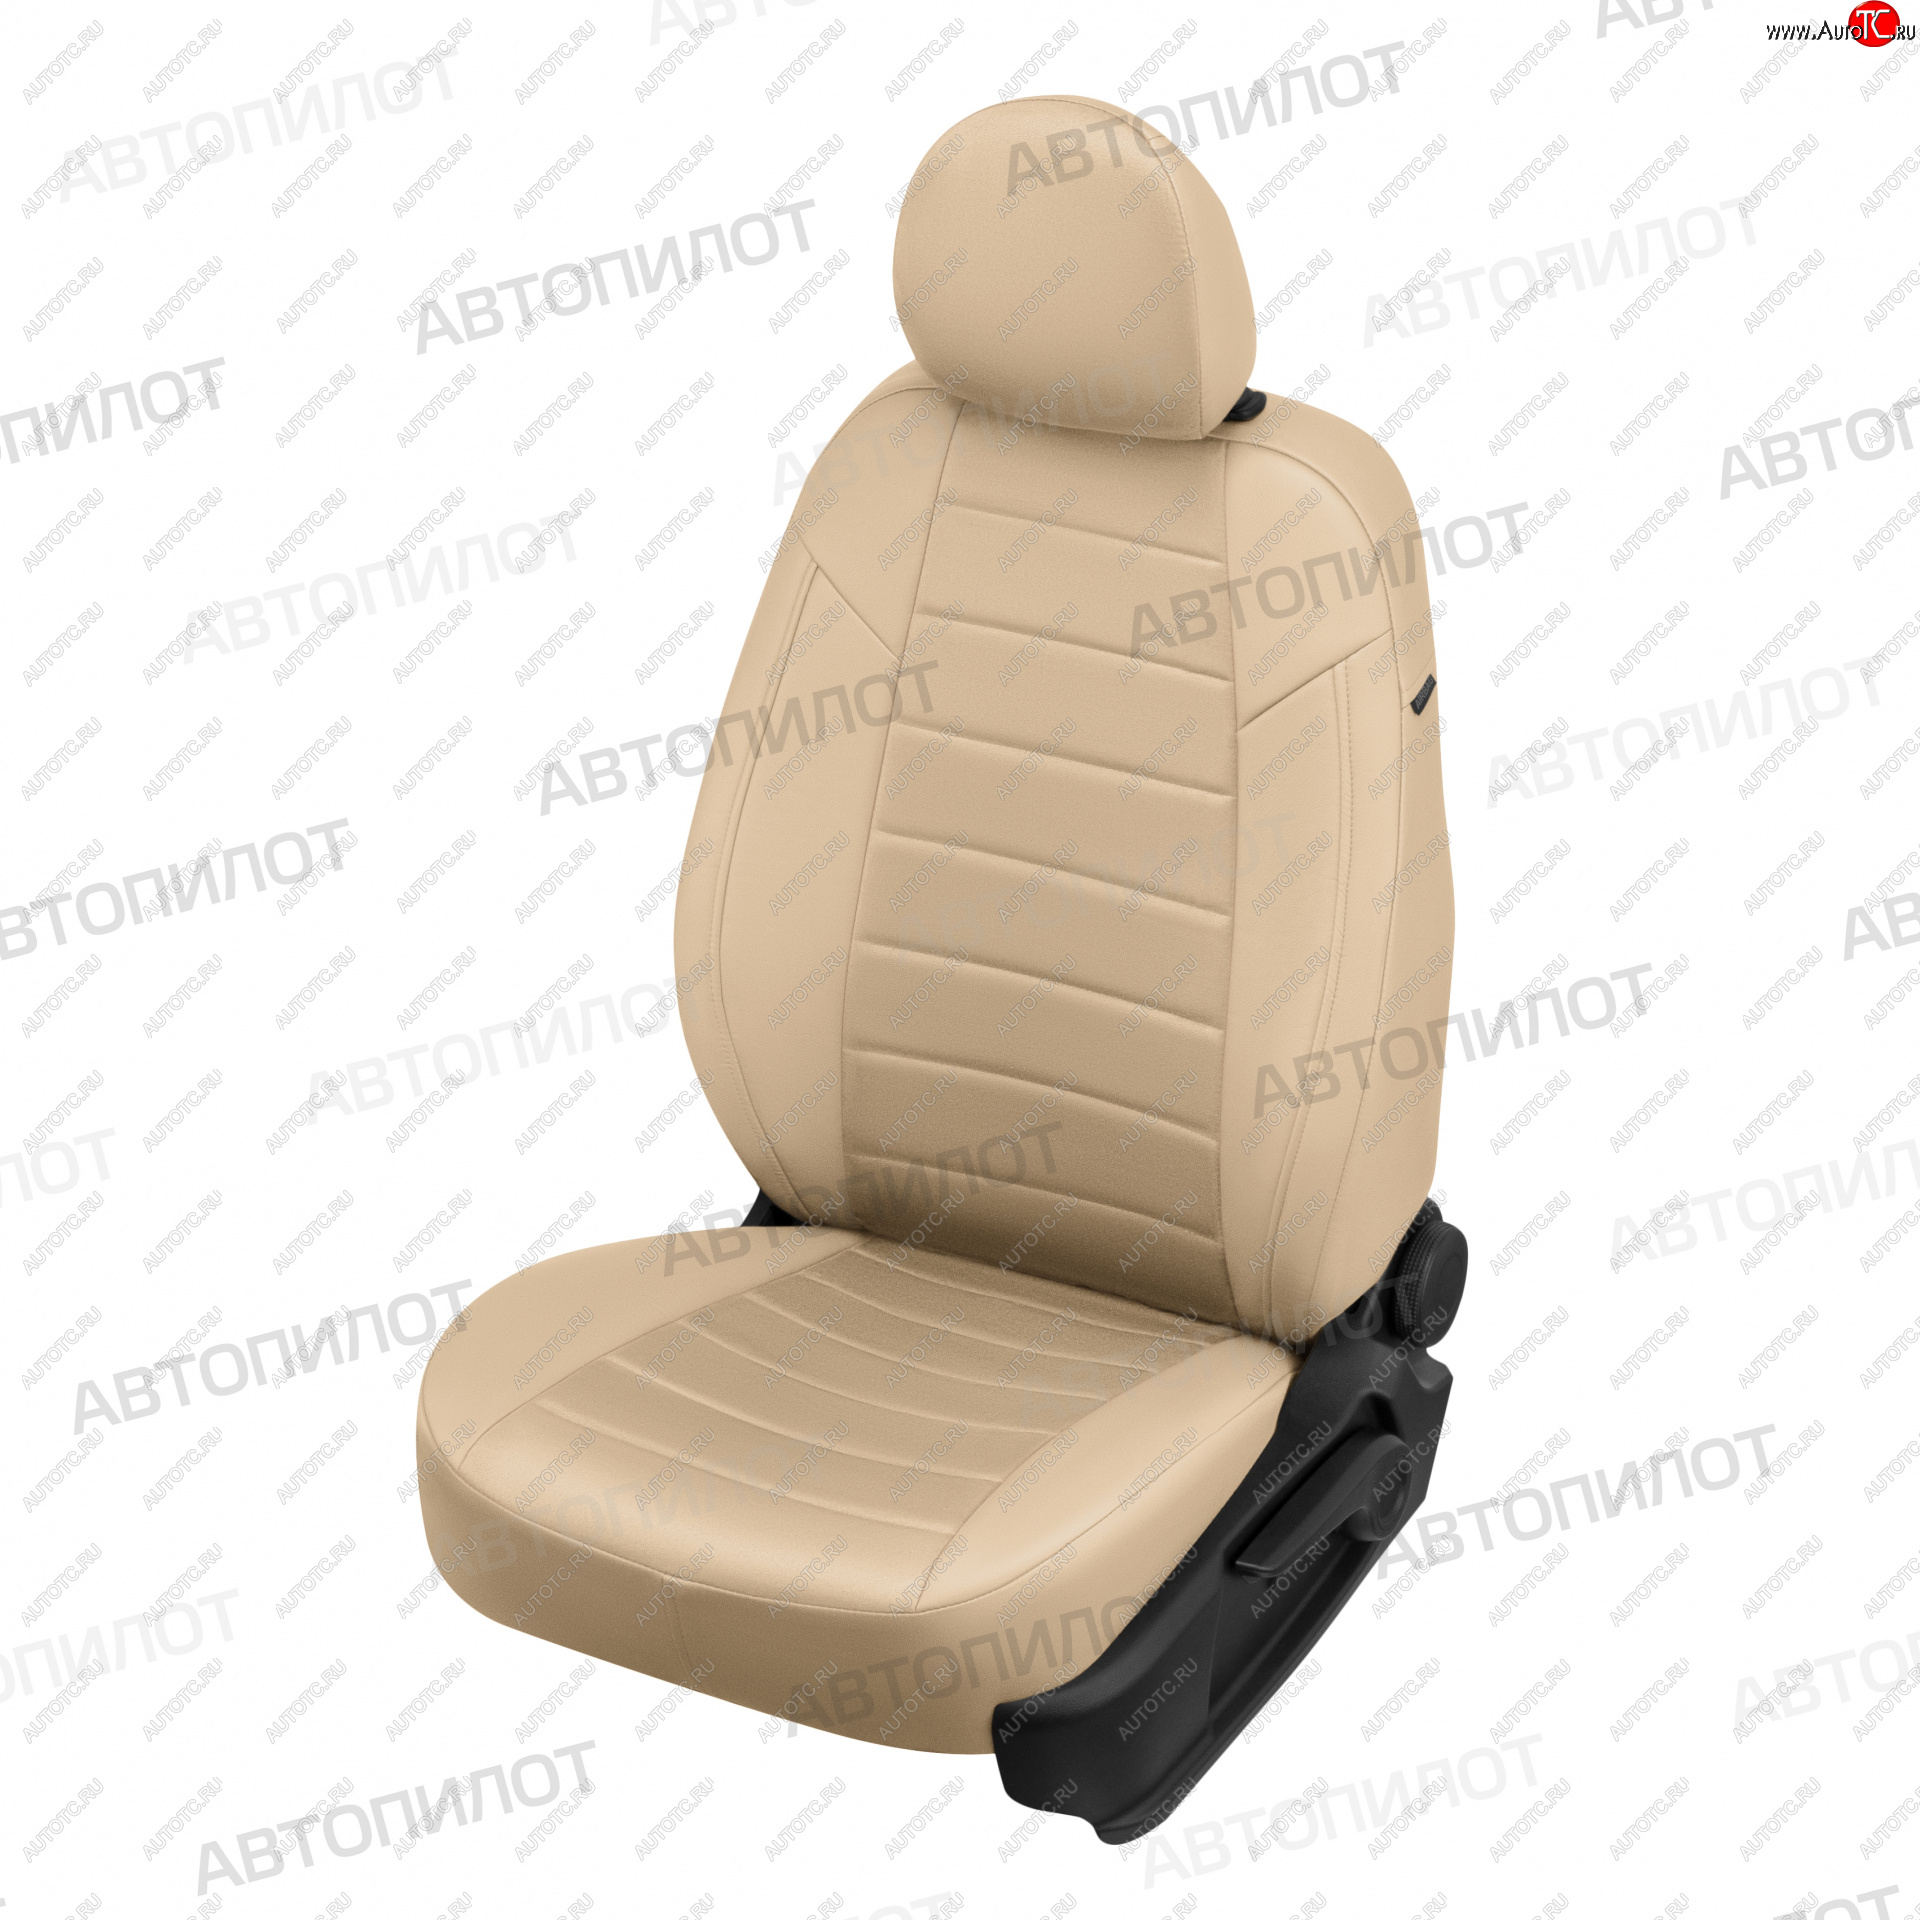 13 849 р. Чехлы сидений (экокожа/алькантара) Автопилот BYD F3 седан (2005-2014) (бежевый)